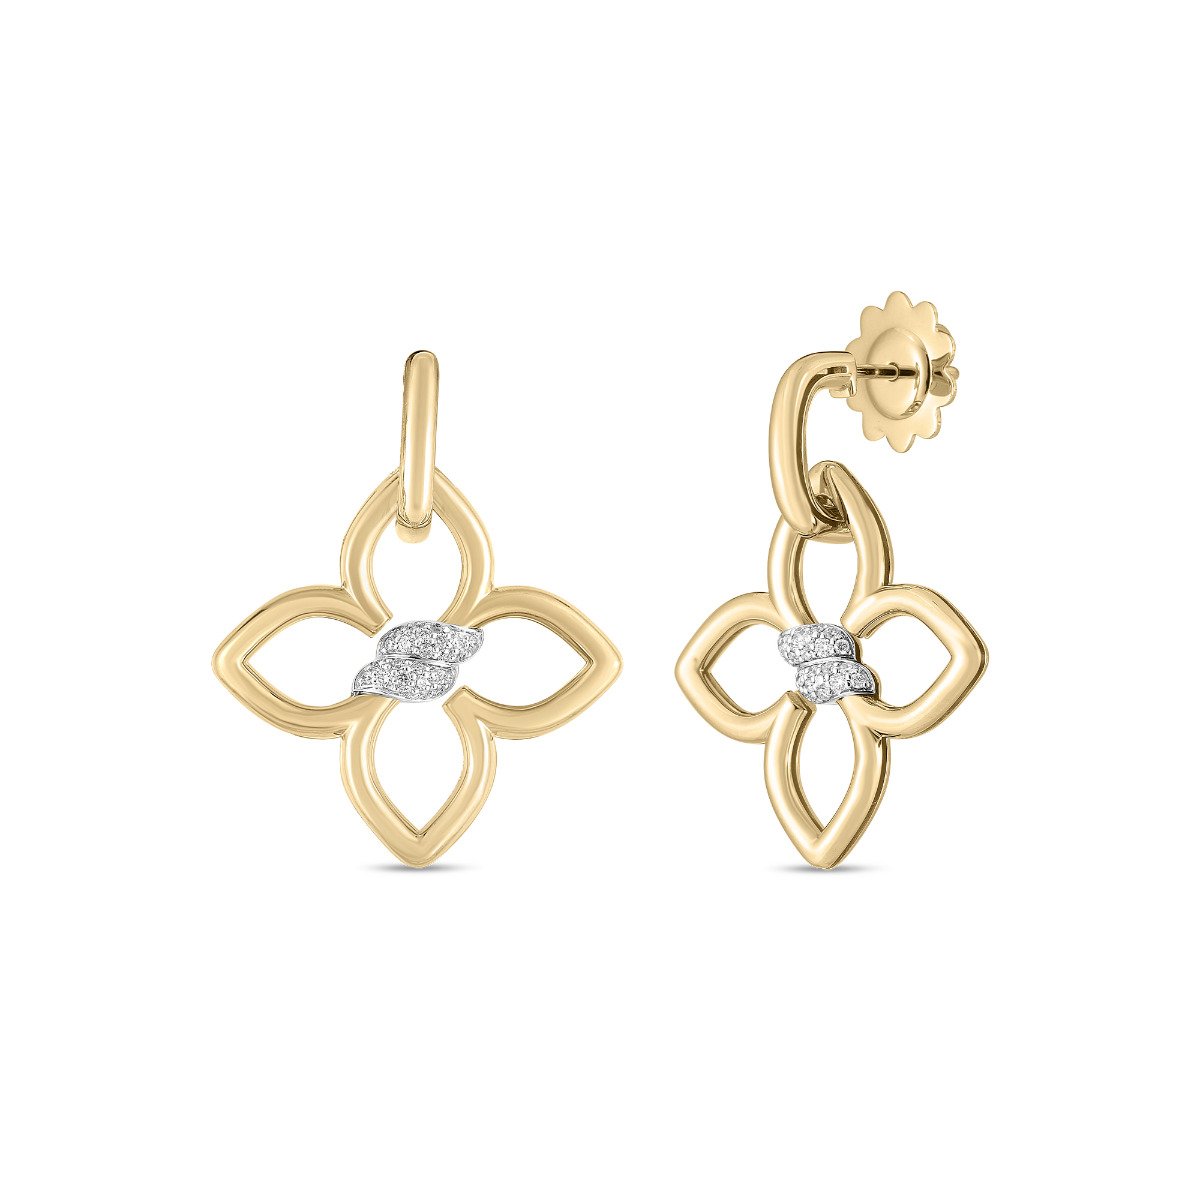 Roberto Coin "Cialoma" 18kt Gold Diamond Flower Earrings